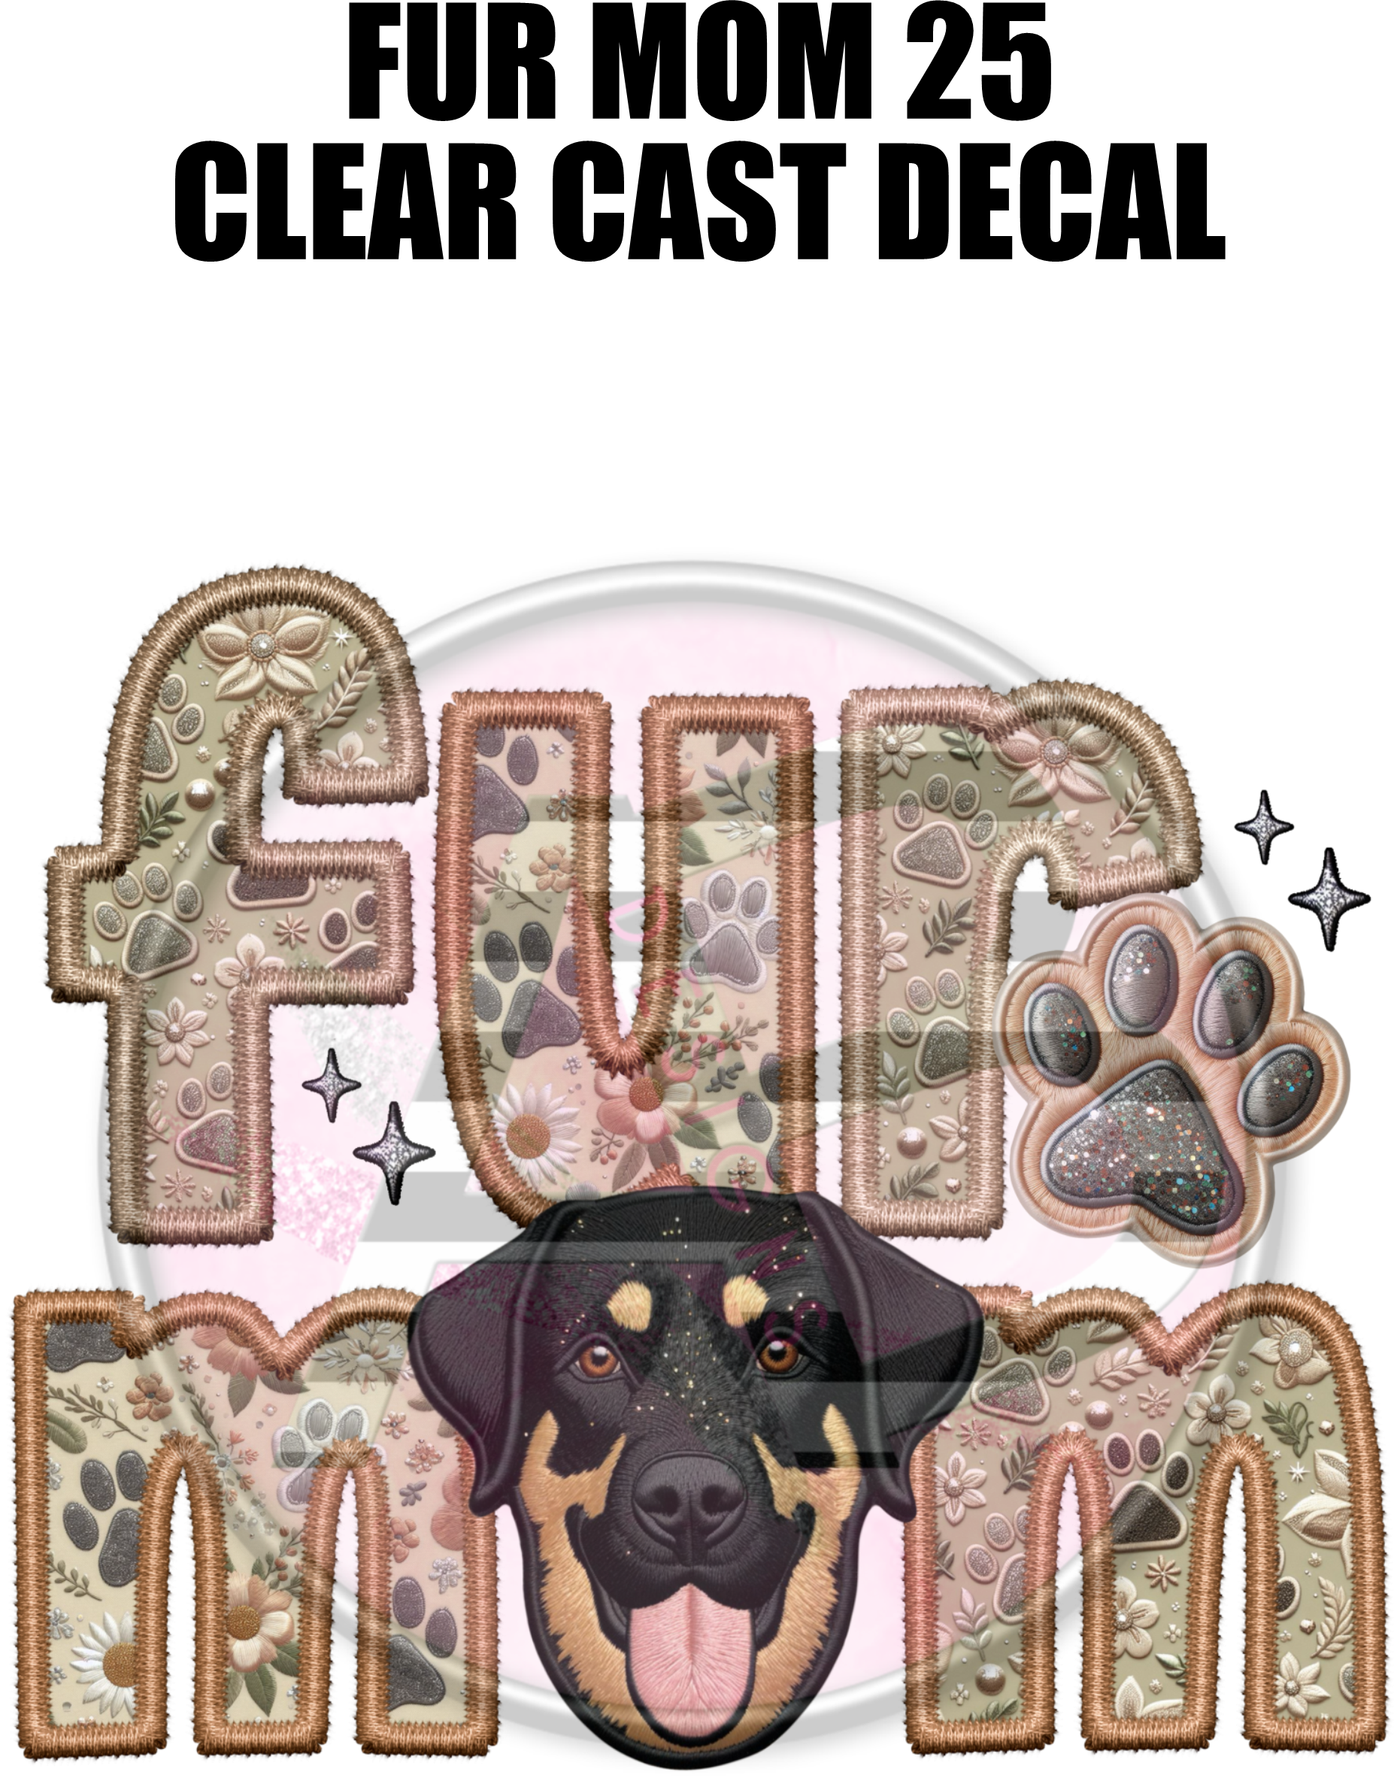 Fur Mom 25 - Clear Cast Decal